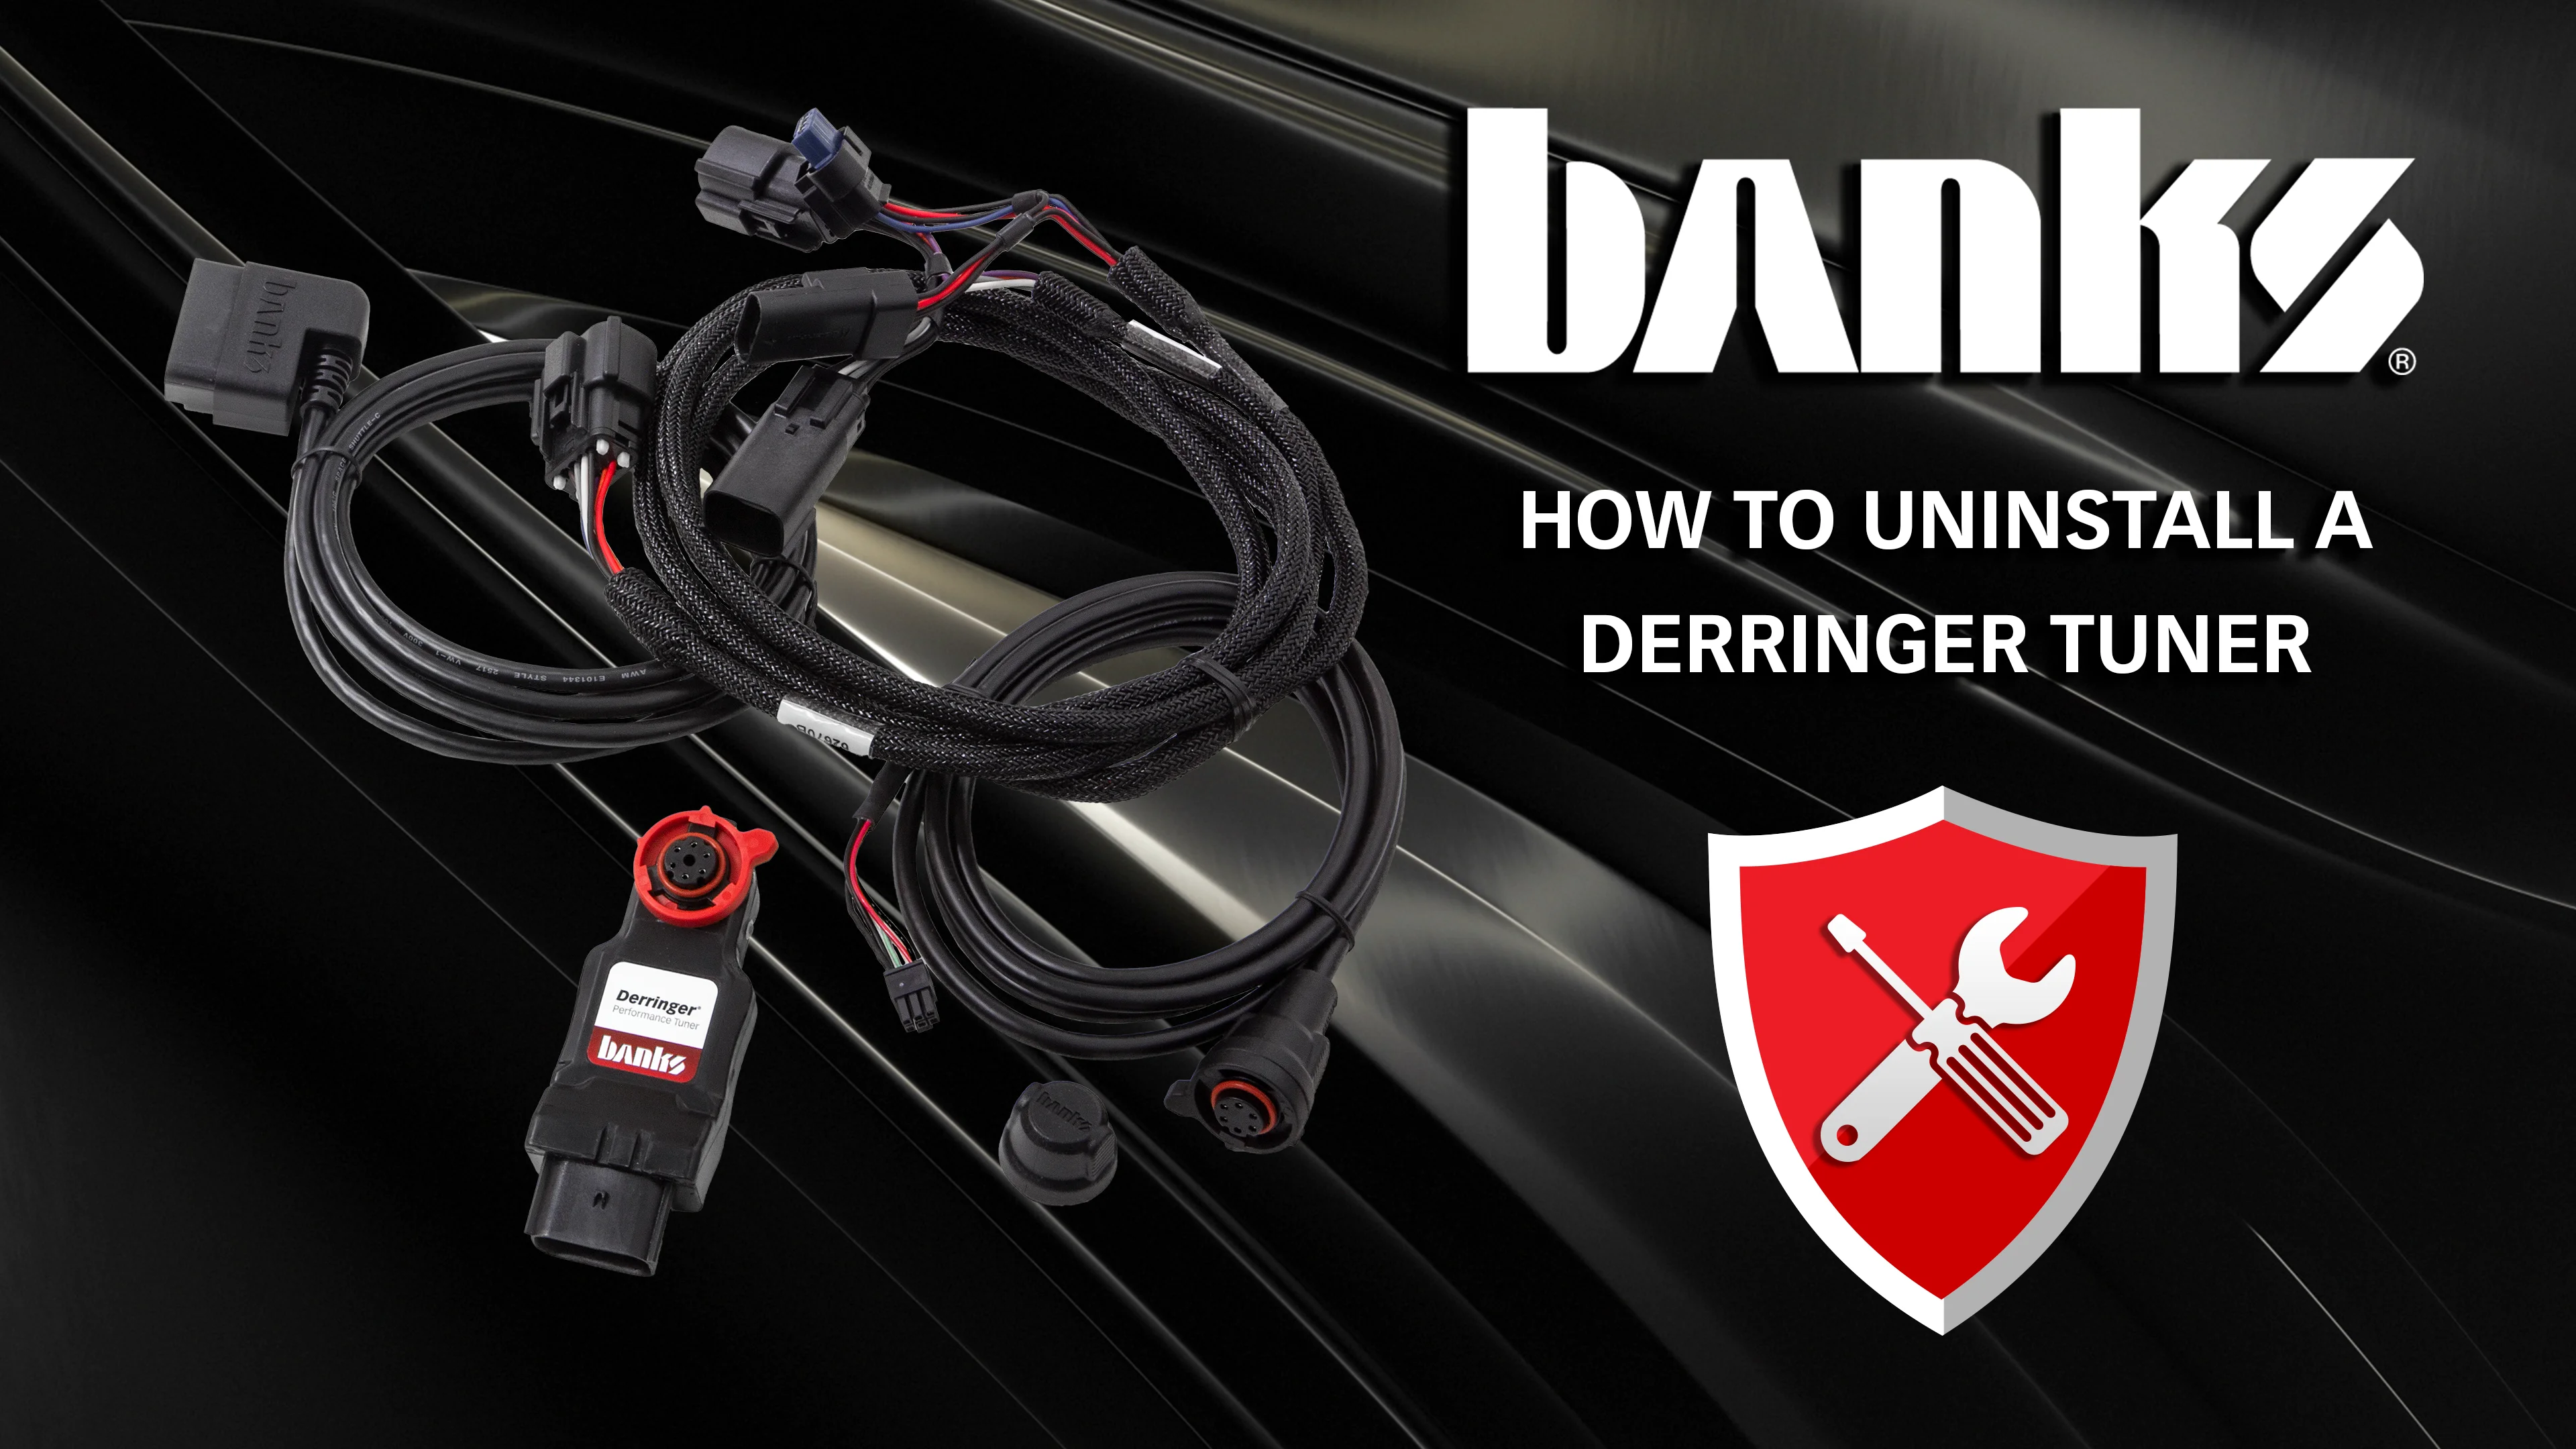 Pro Tuning - Bardahl Anti Rongeur. Keep your car wiring